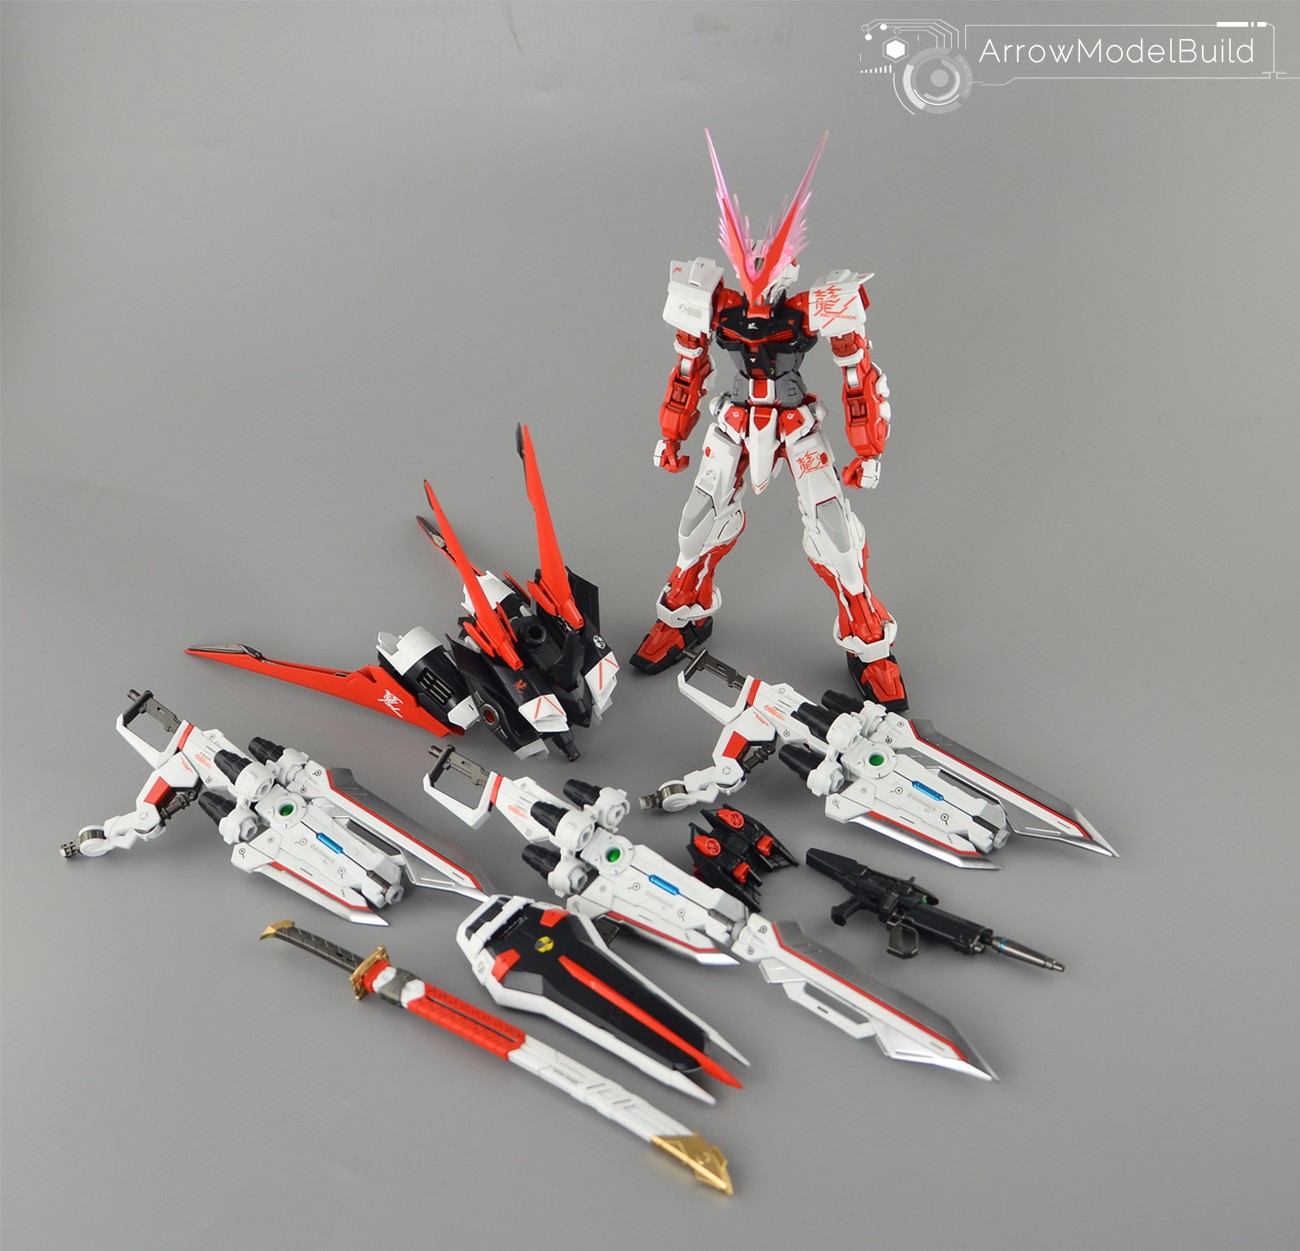 Arrowmodelbuild Figure And Robot Gundam Military Vehicle Arrow Model Build Arrowmodelbuild Astray Red Dragon Built Painted Mg 1 100 Model Kit